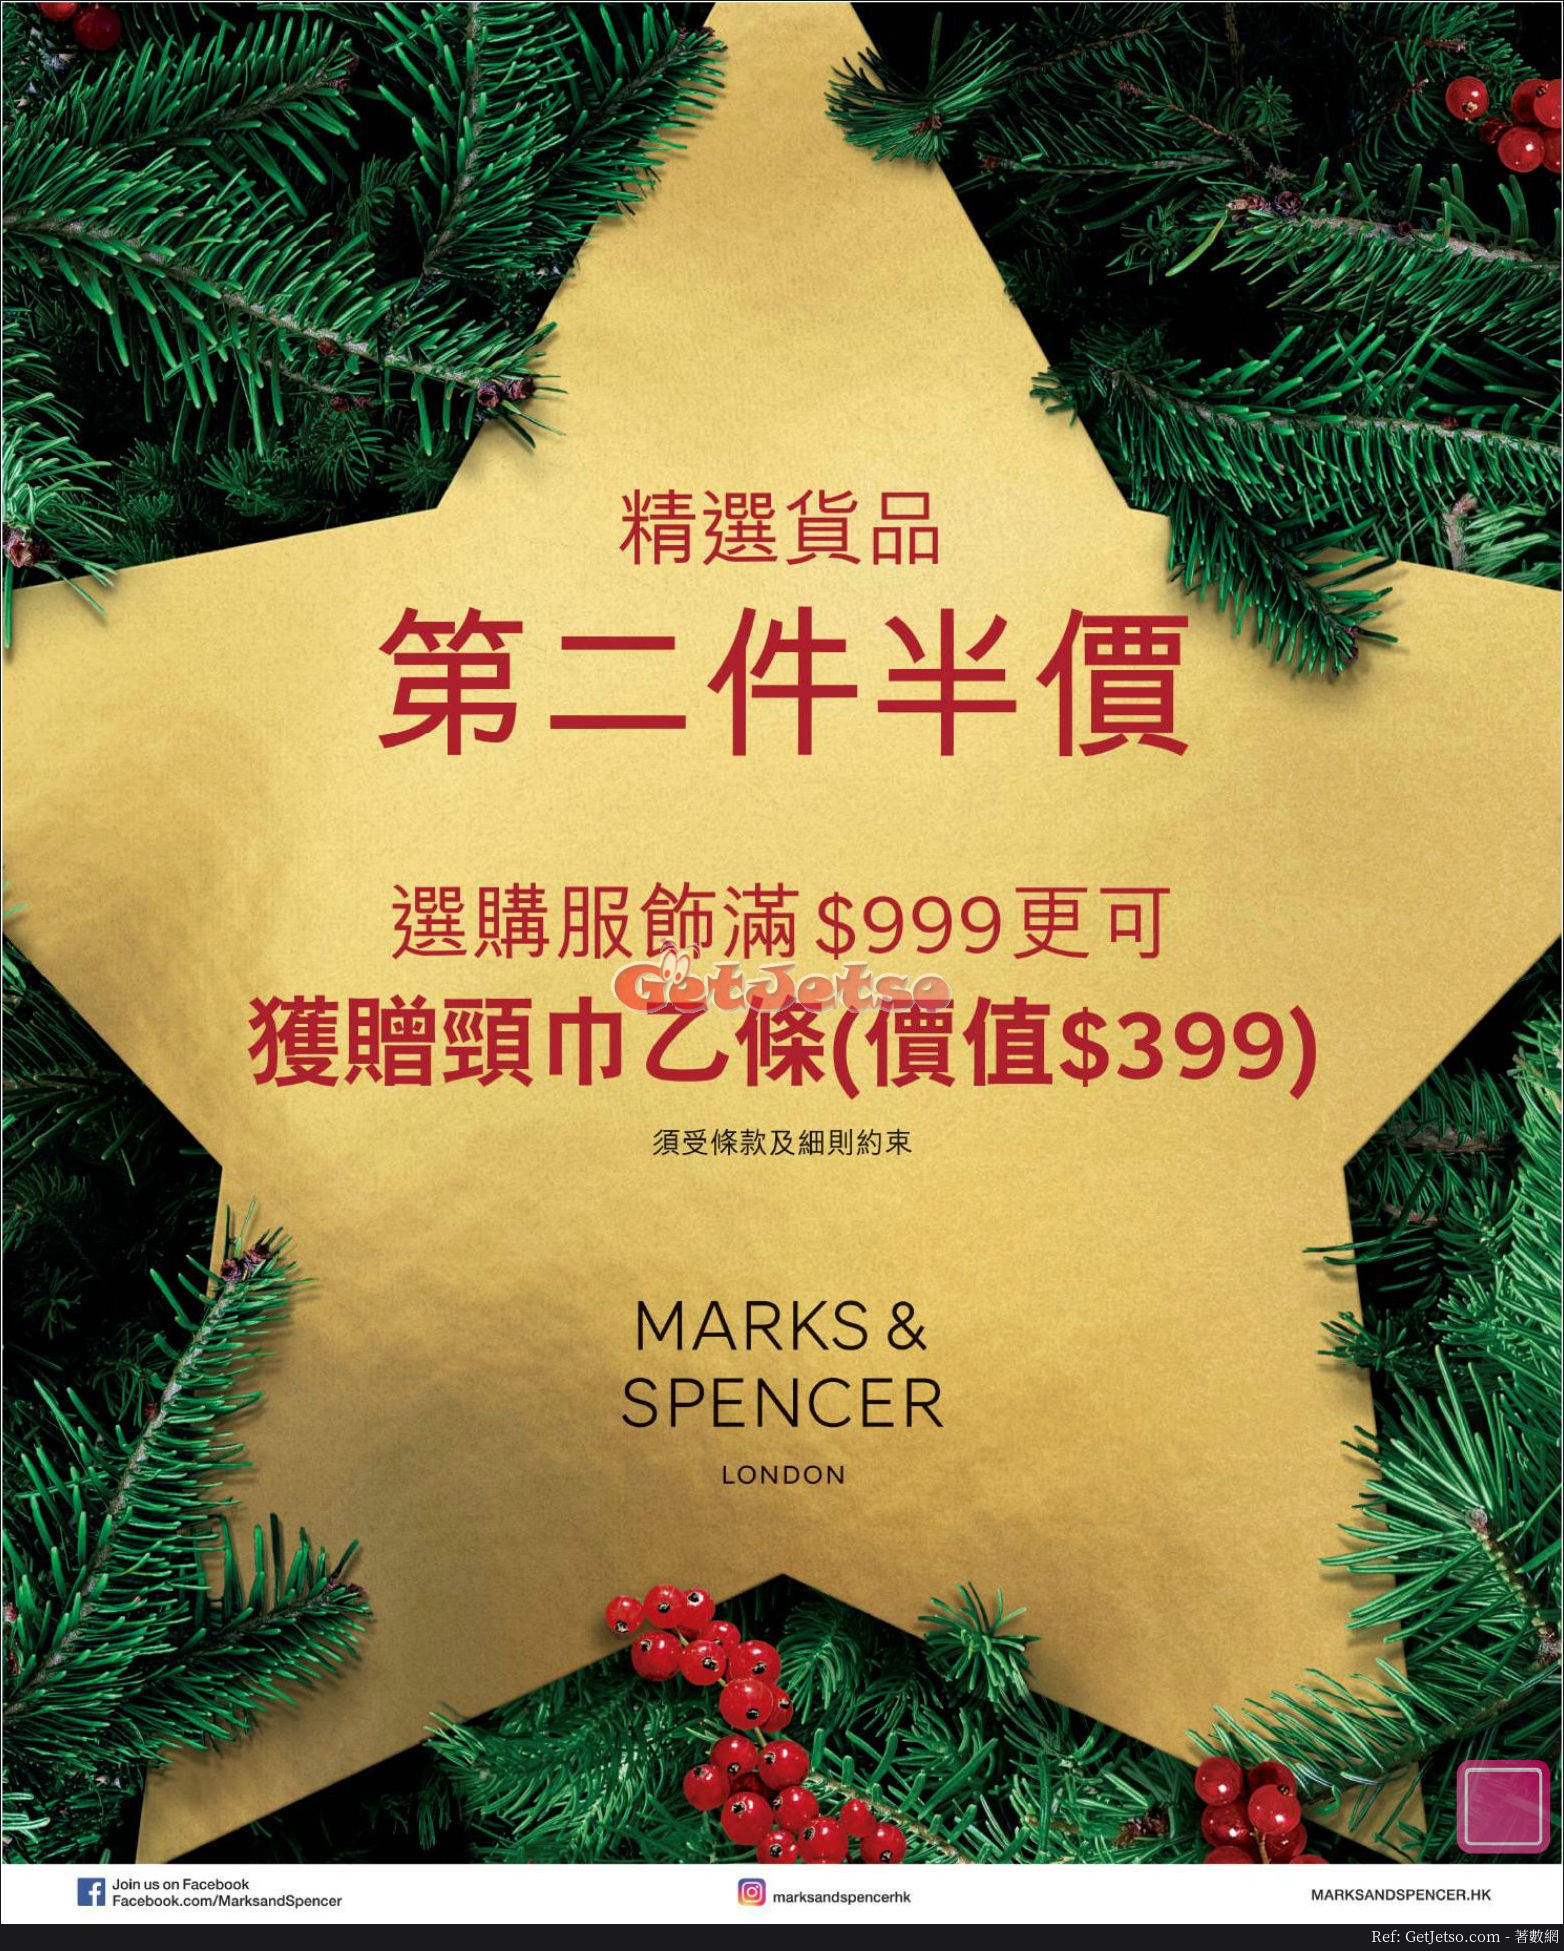 Marks & Spencer 馬莎第2件半價、購物滿9送頸巾優惠(17年11月23日)圖片1